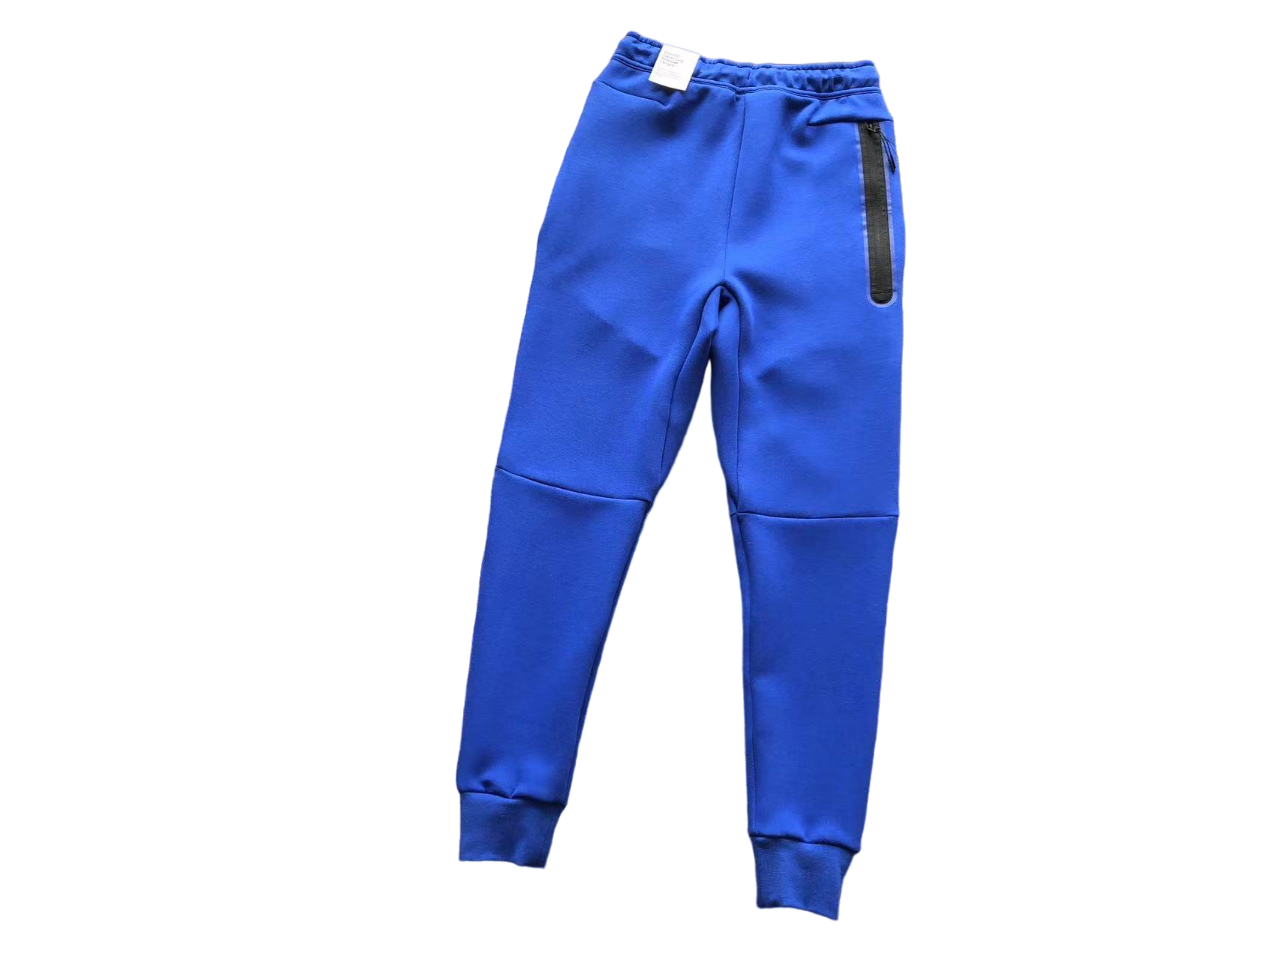 Nike Tech Fleece blue set